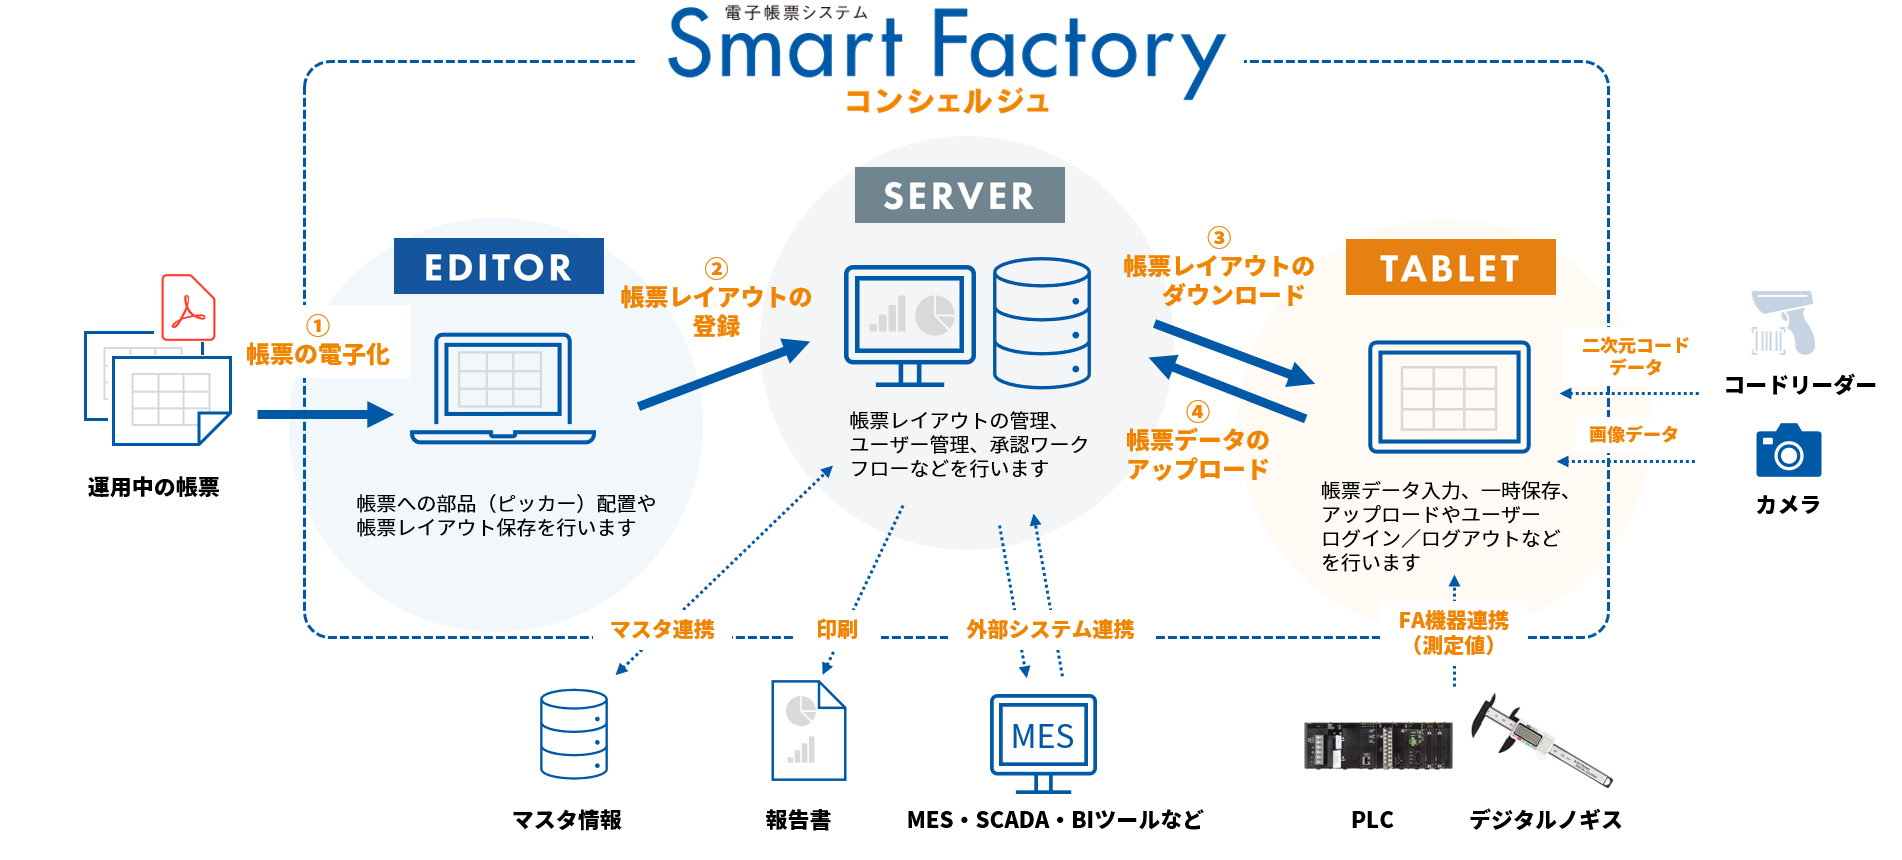 SmartFactoryコンシェルジュ_システム構成図_220419.png